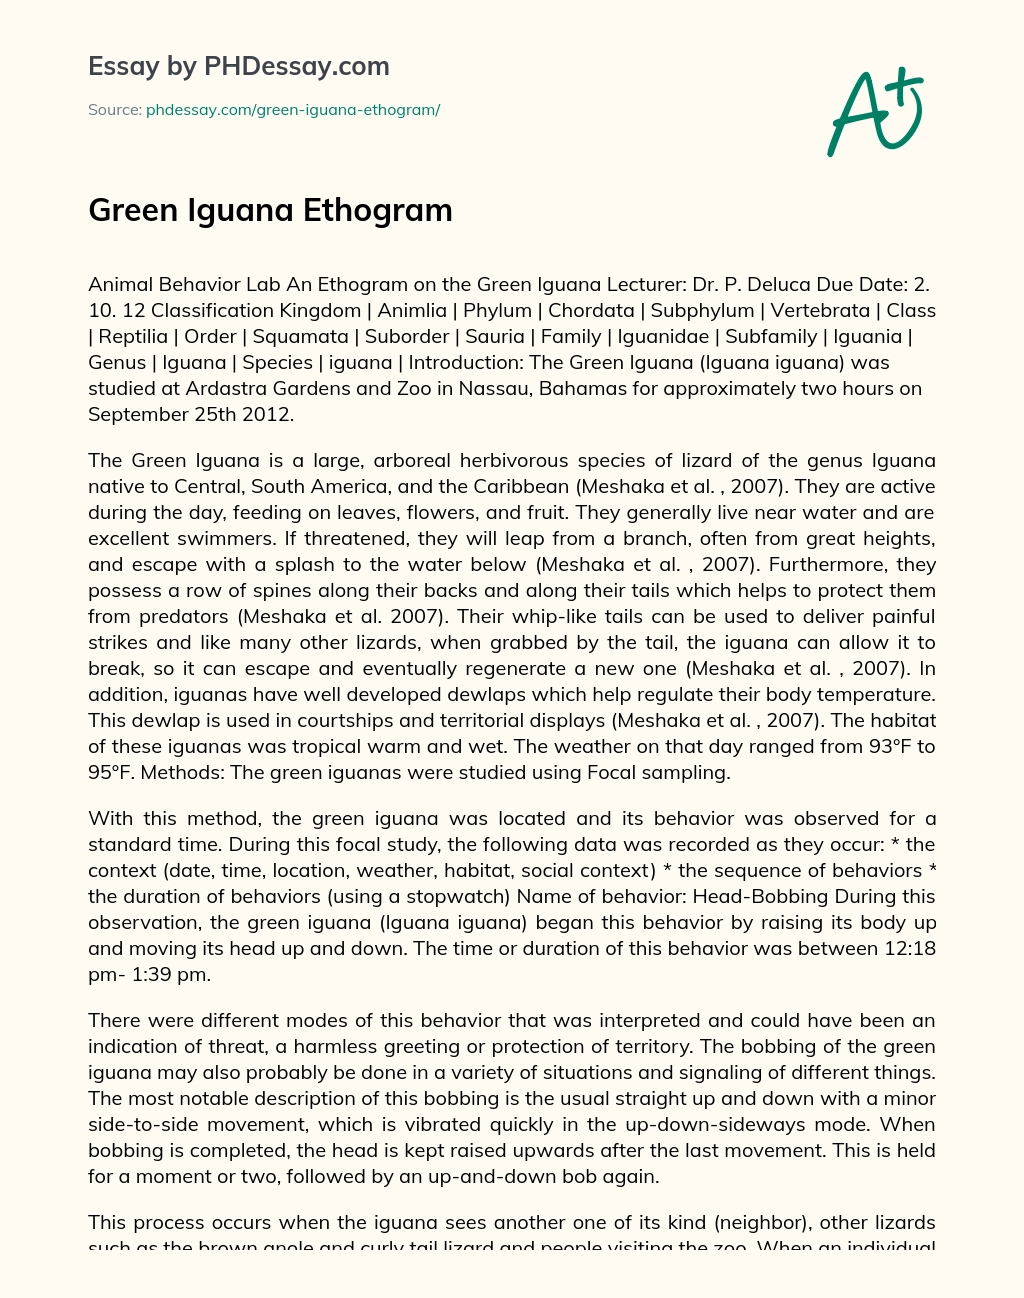 Green Iguana Ethogram essay